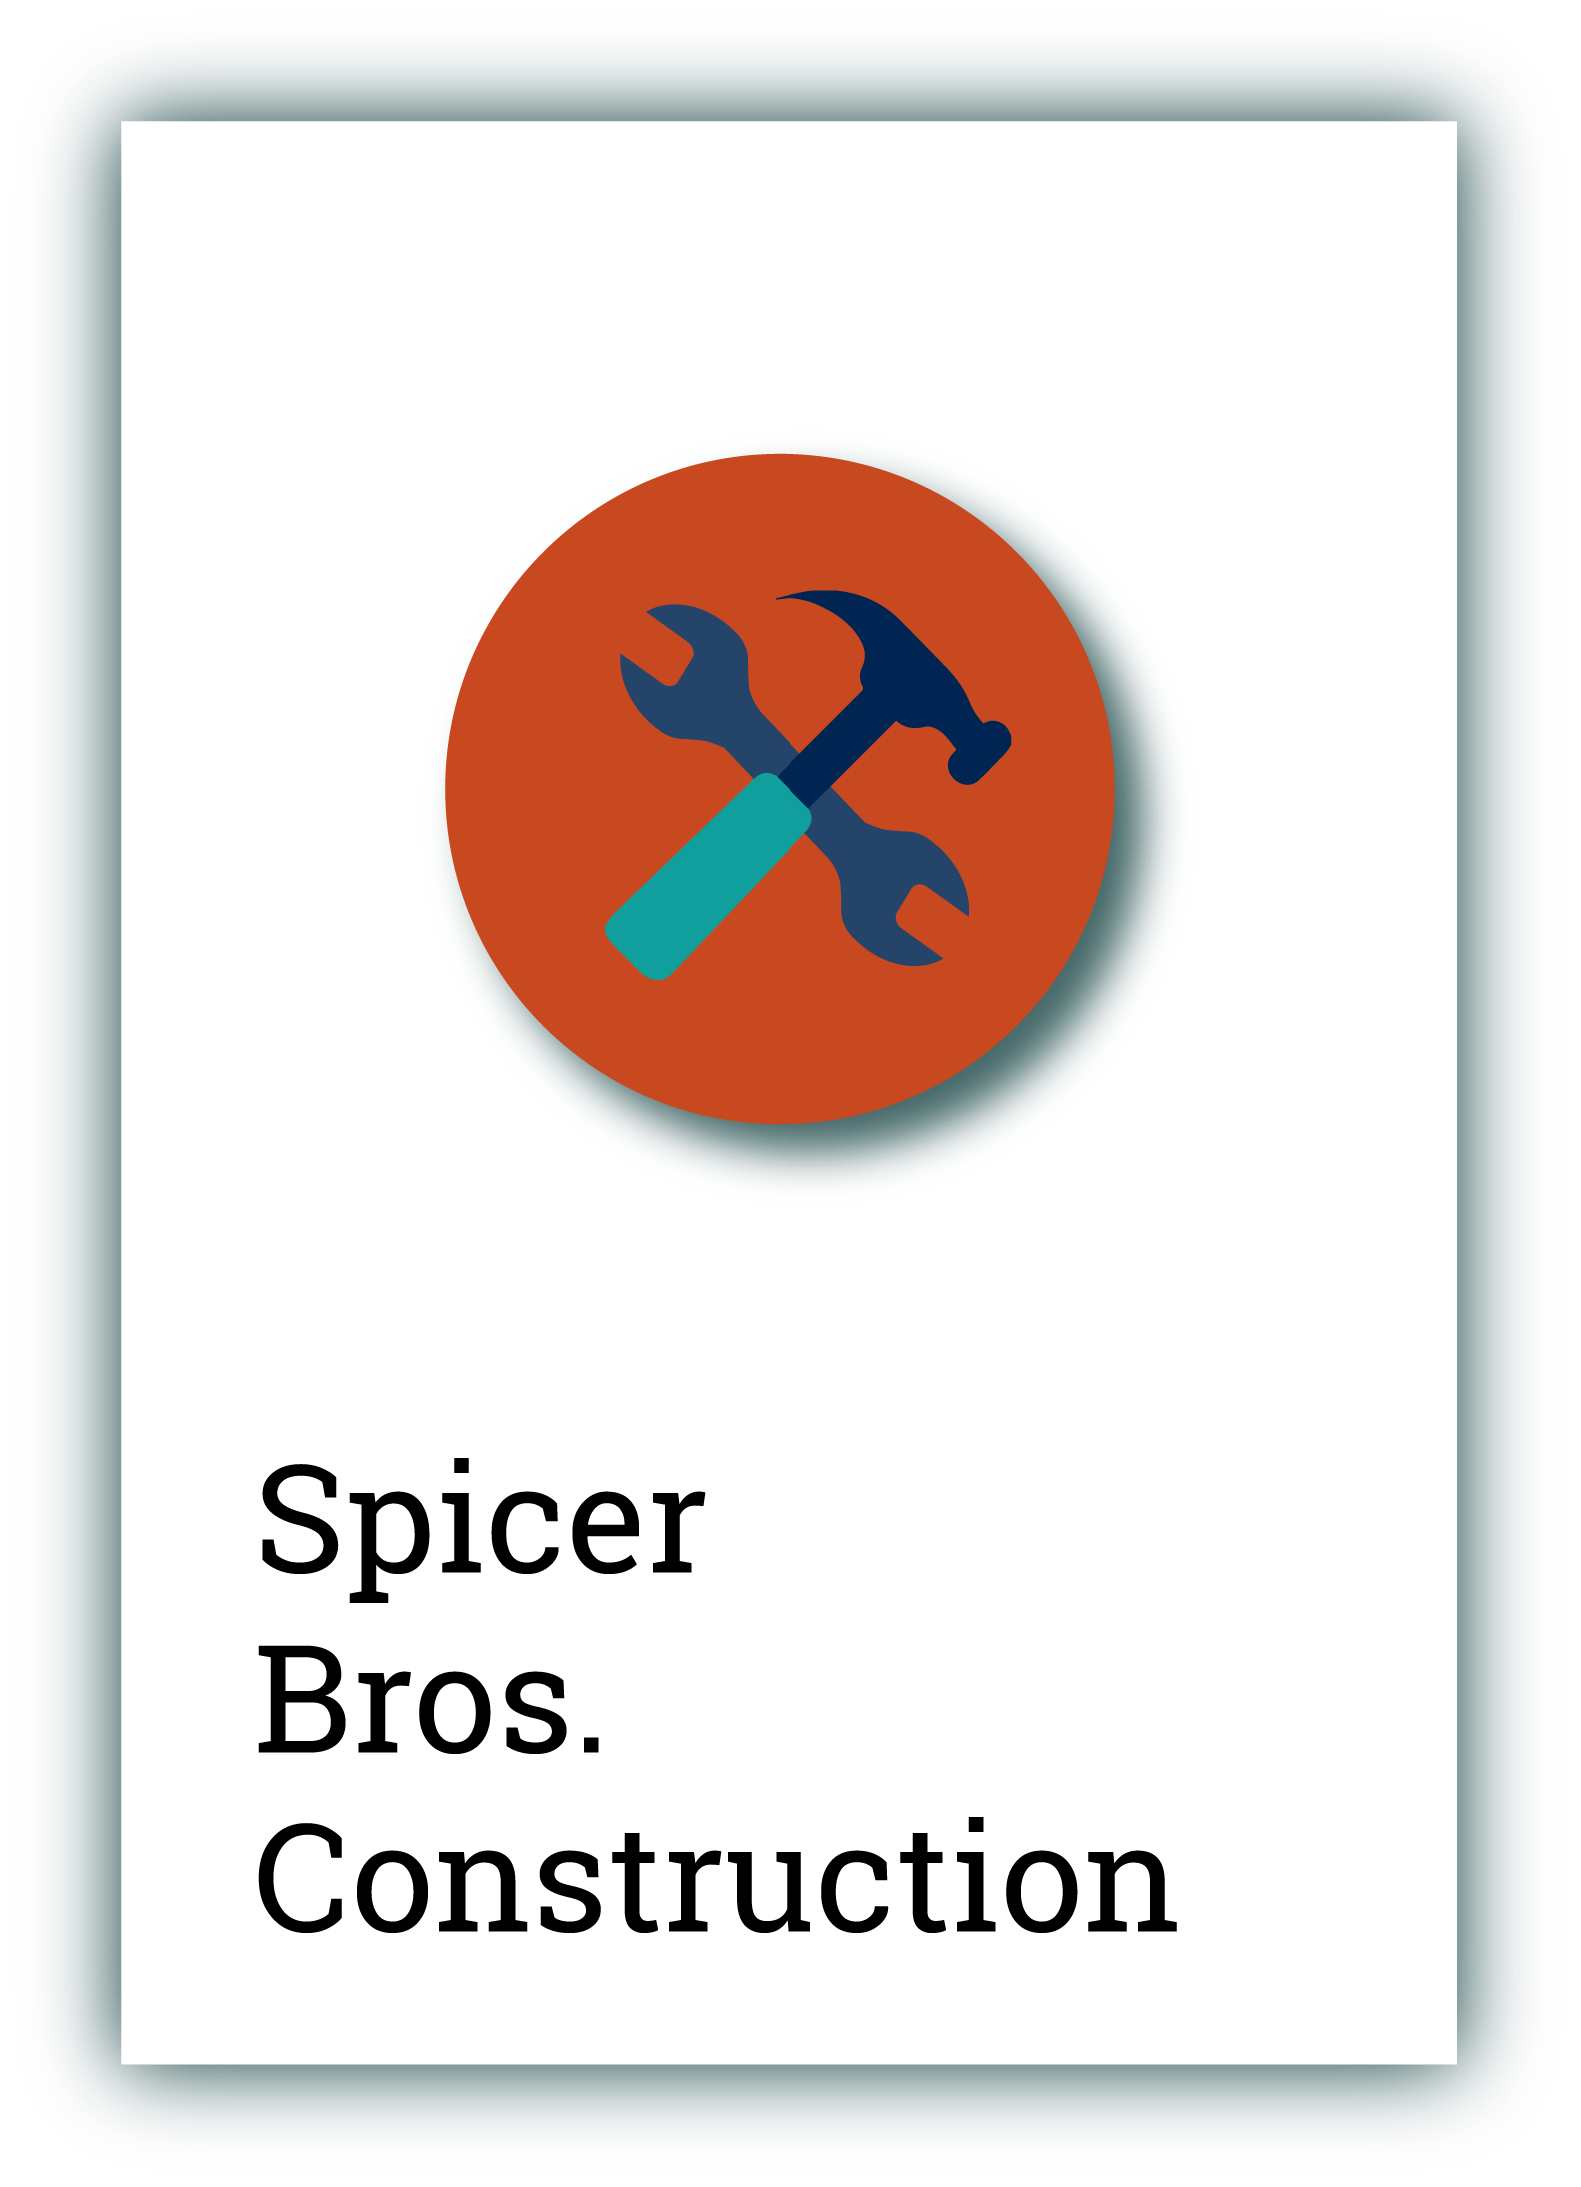 Spicer Bros